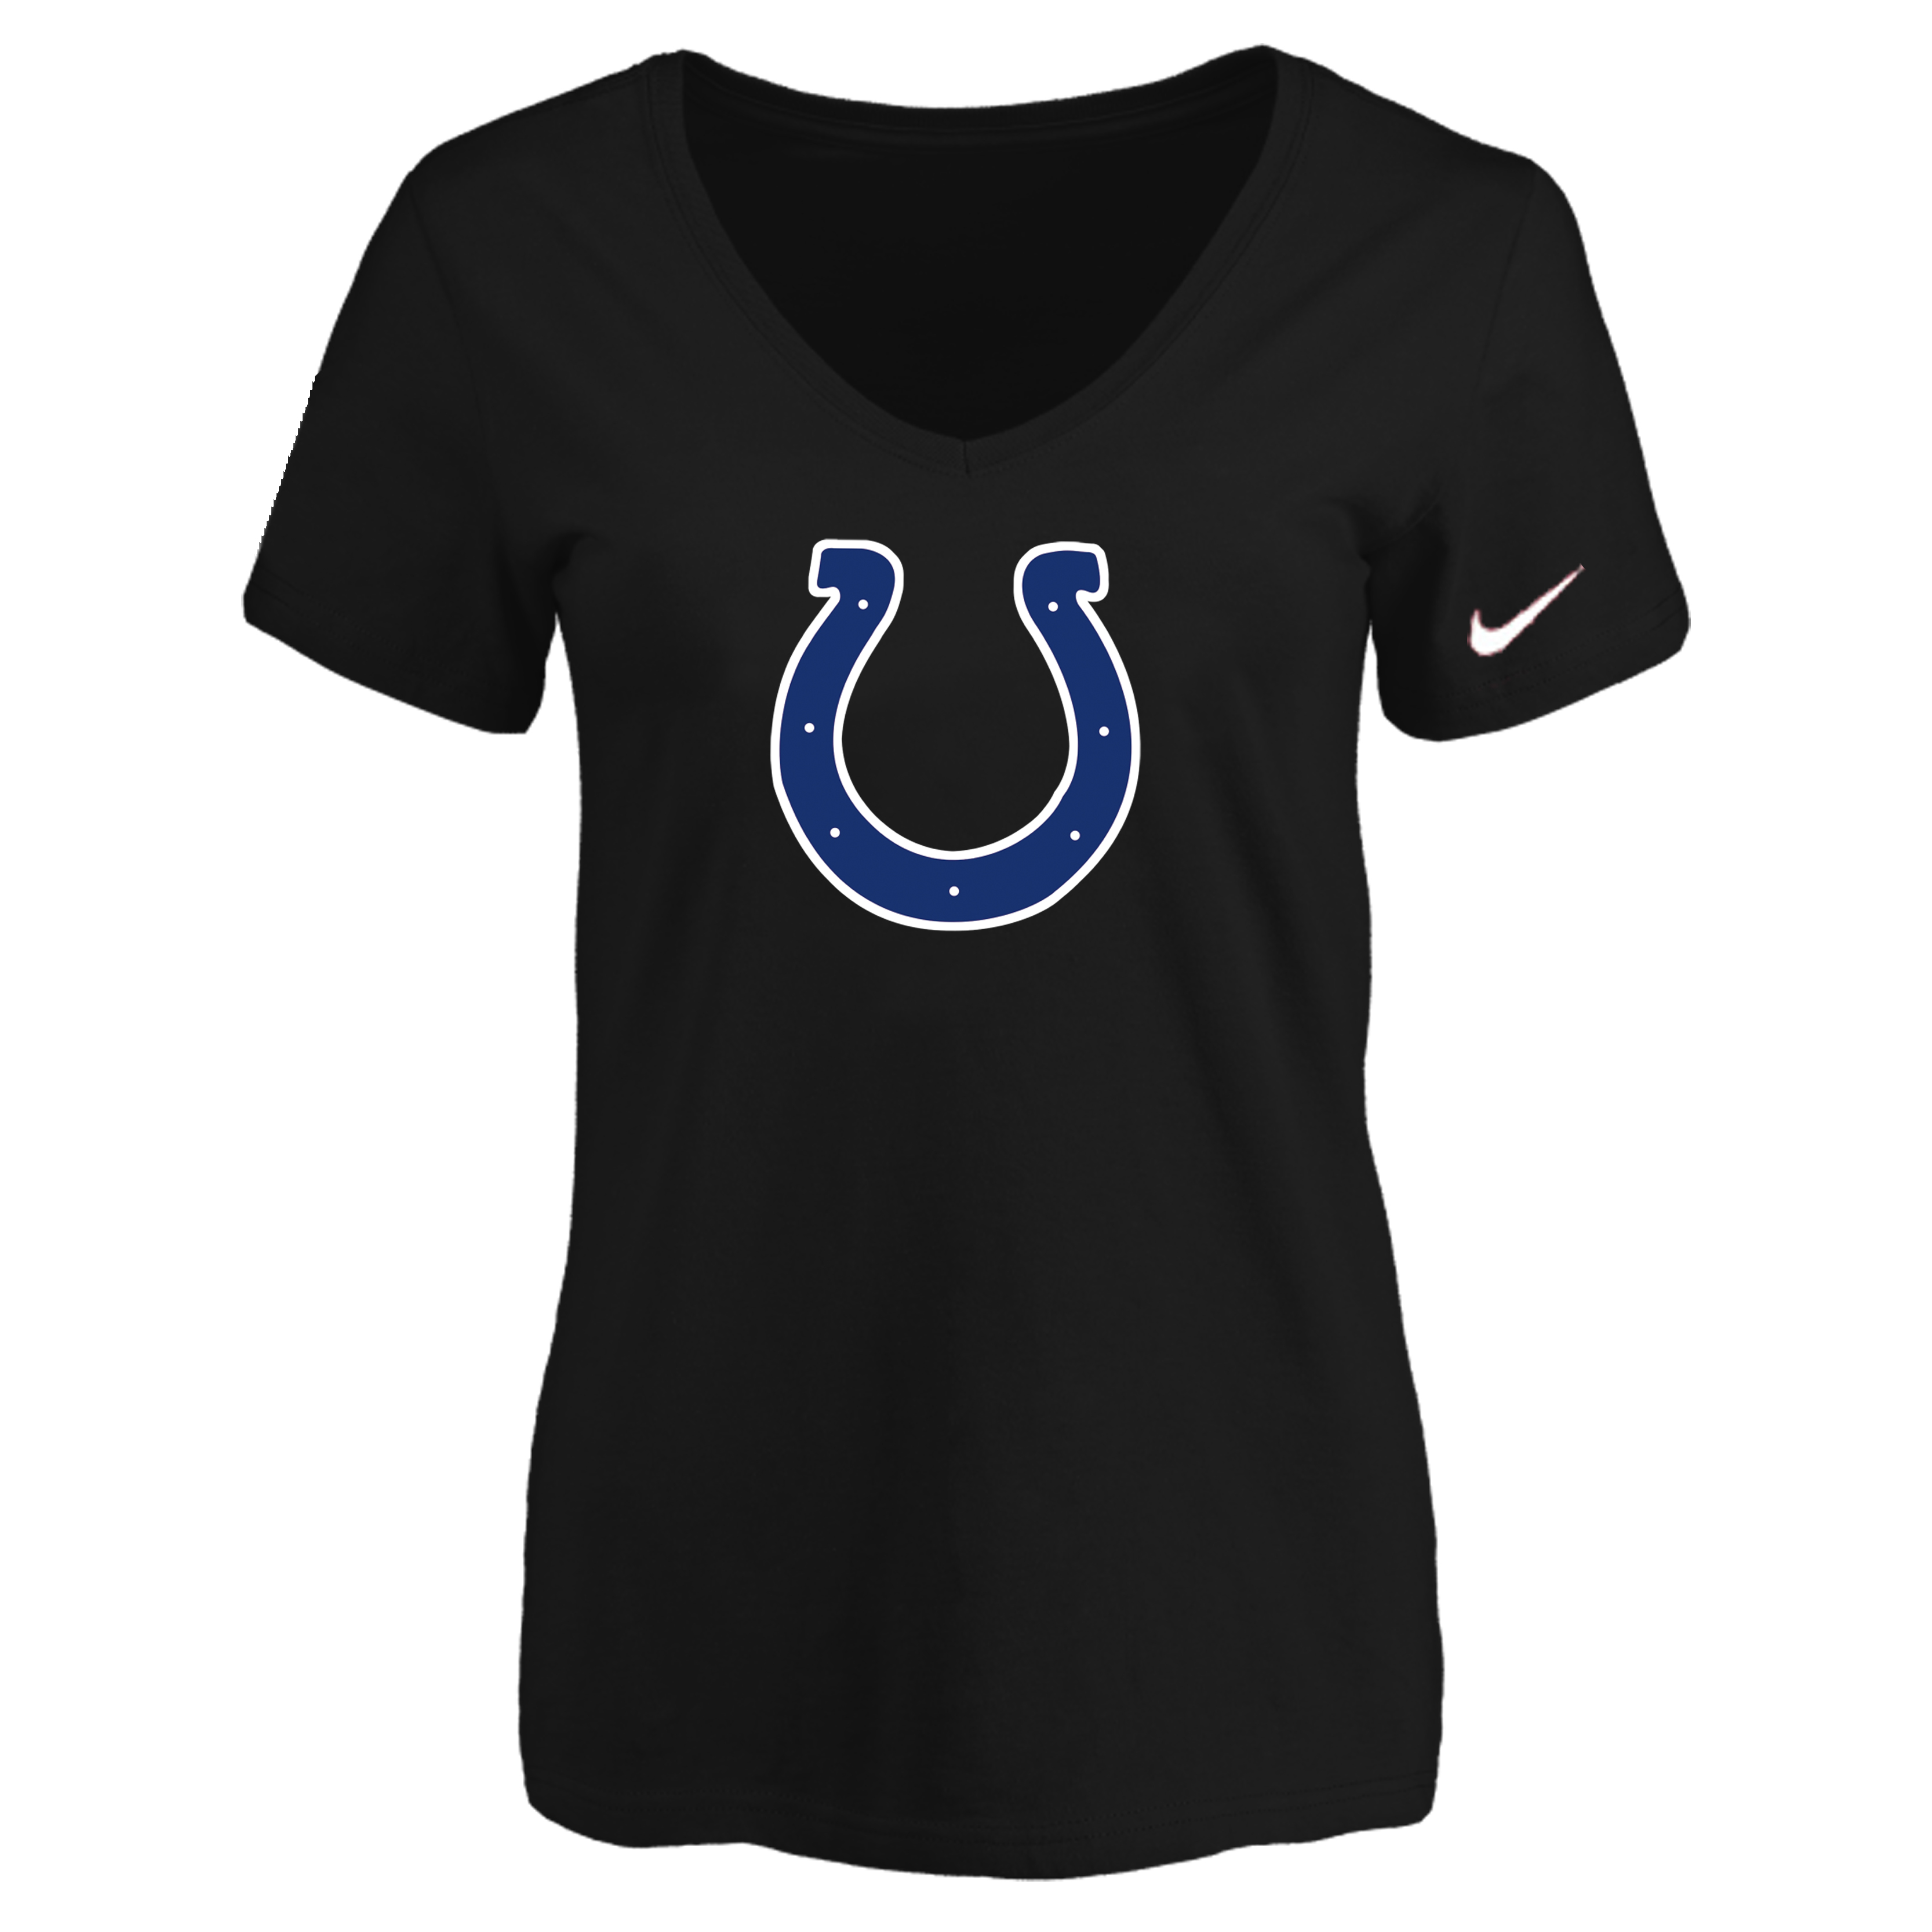 Indiannapolis Colts Black Women's Logo V neck T-Shirt